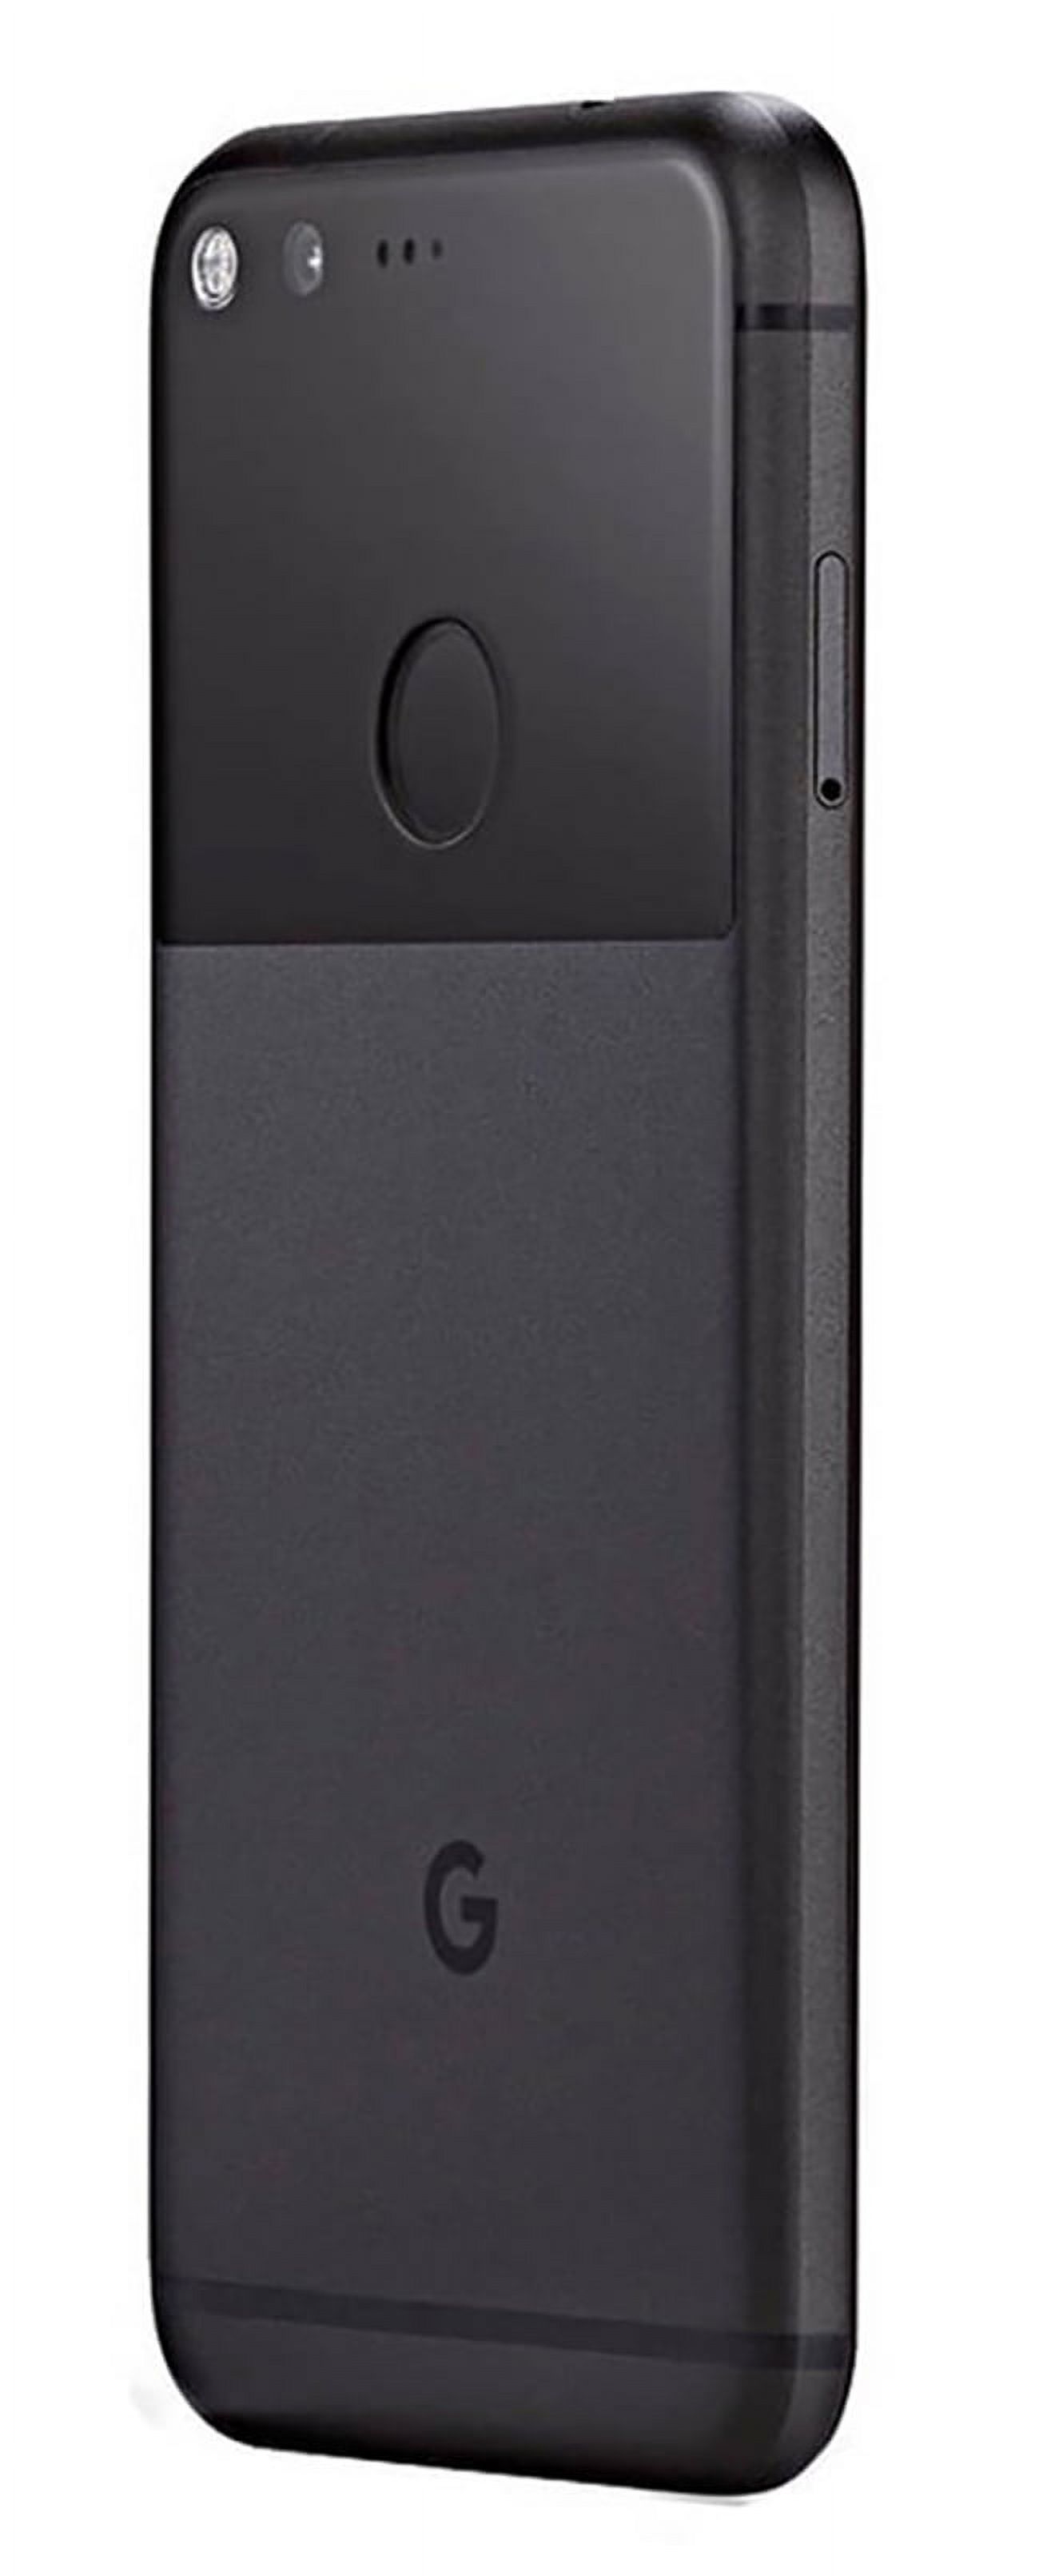 Google Pixel Phone 128 GB - 5 inch Display (Factory Unlocked US Version) (Quite Black) - image 5 of 6